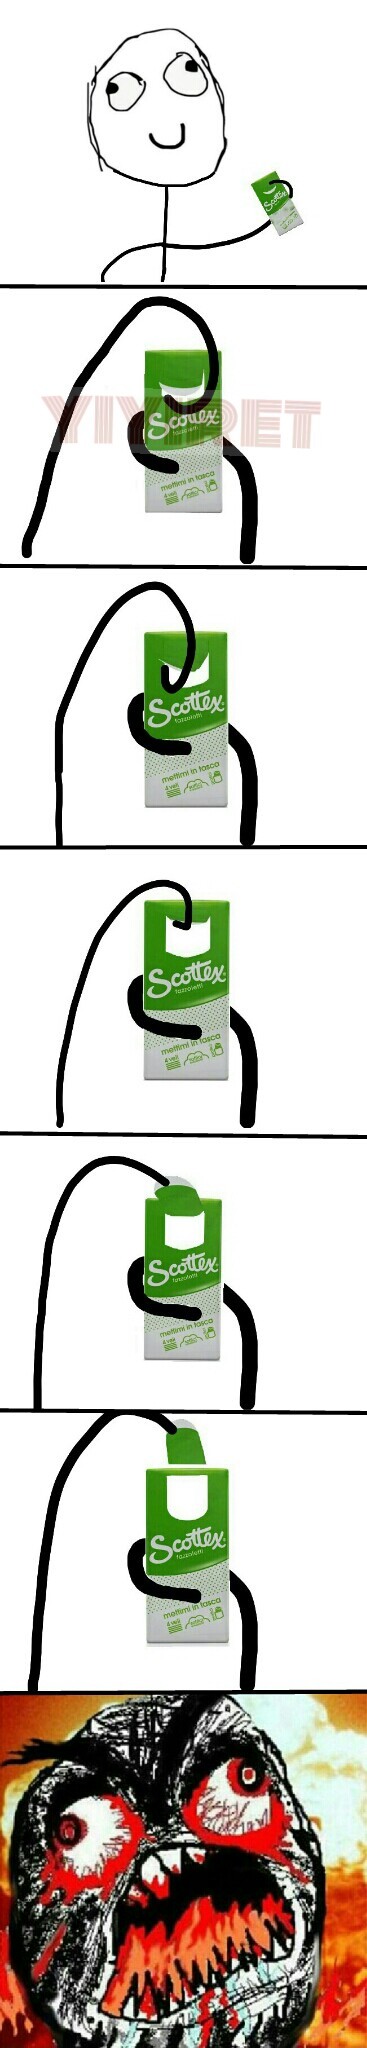 Scottecs - meme